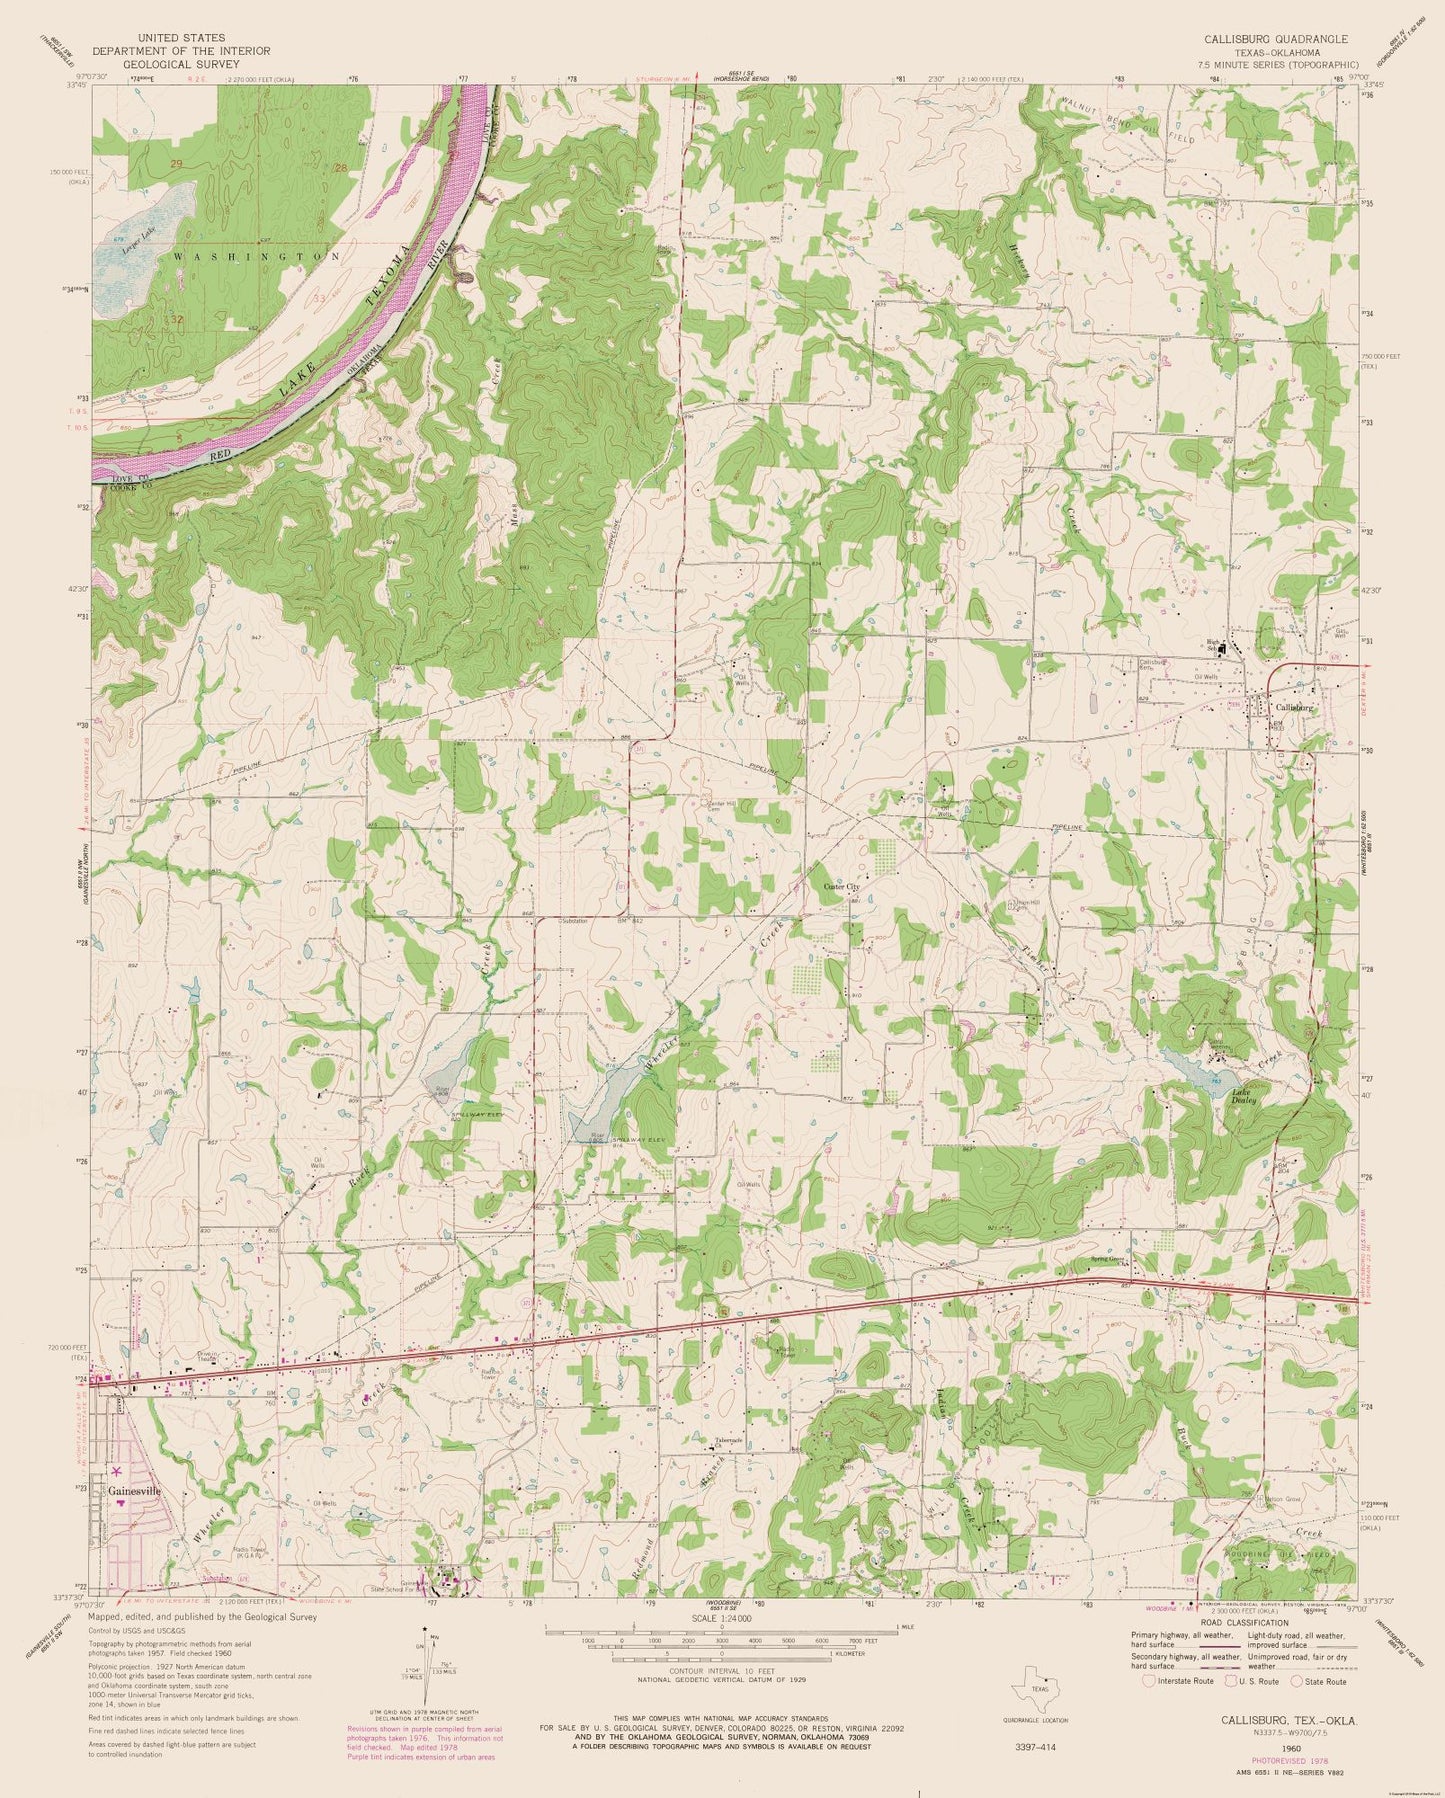 Topographical Map - Callisburg Texas Quad - USGS 1960 - 23 x 28.62 - Vintage Wall Art